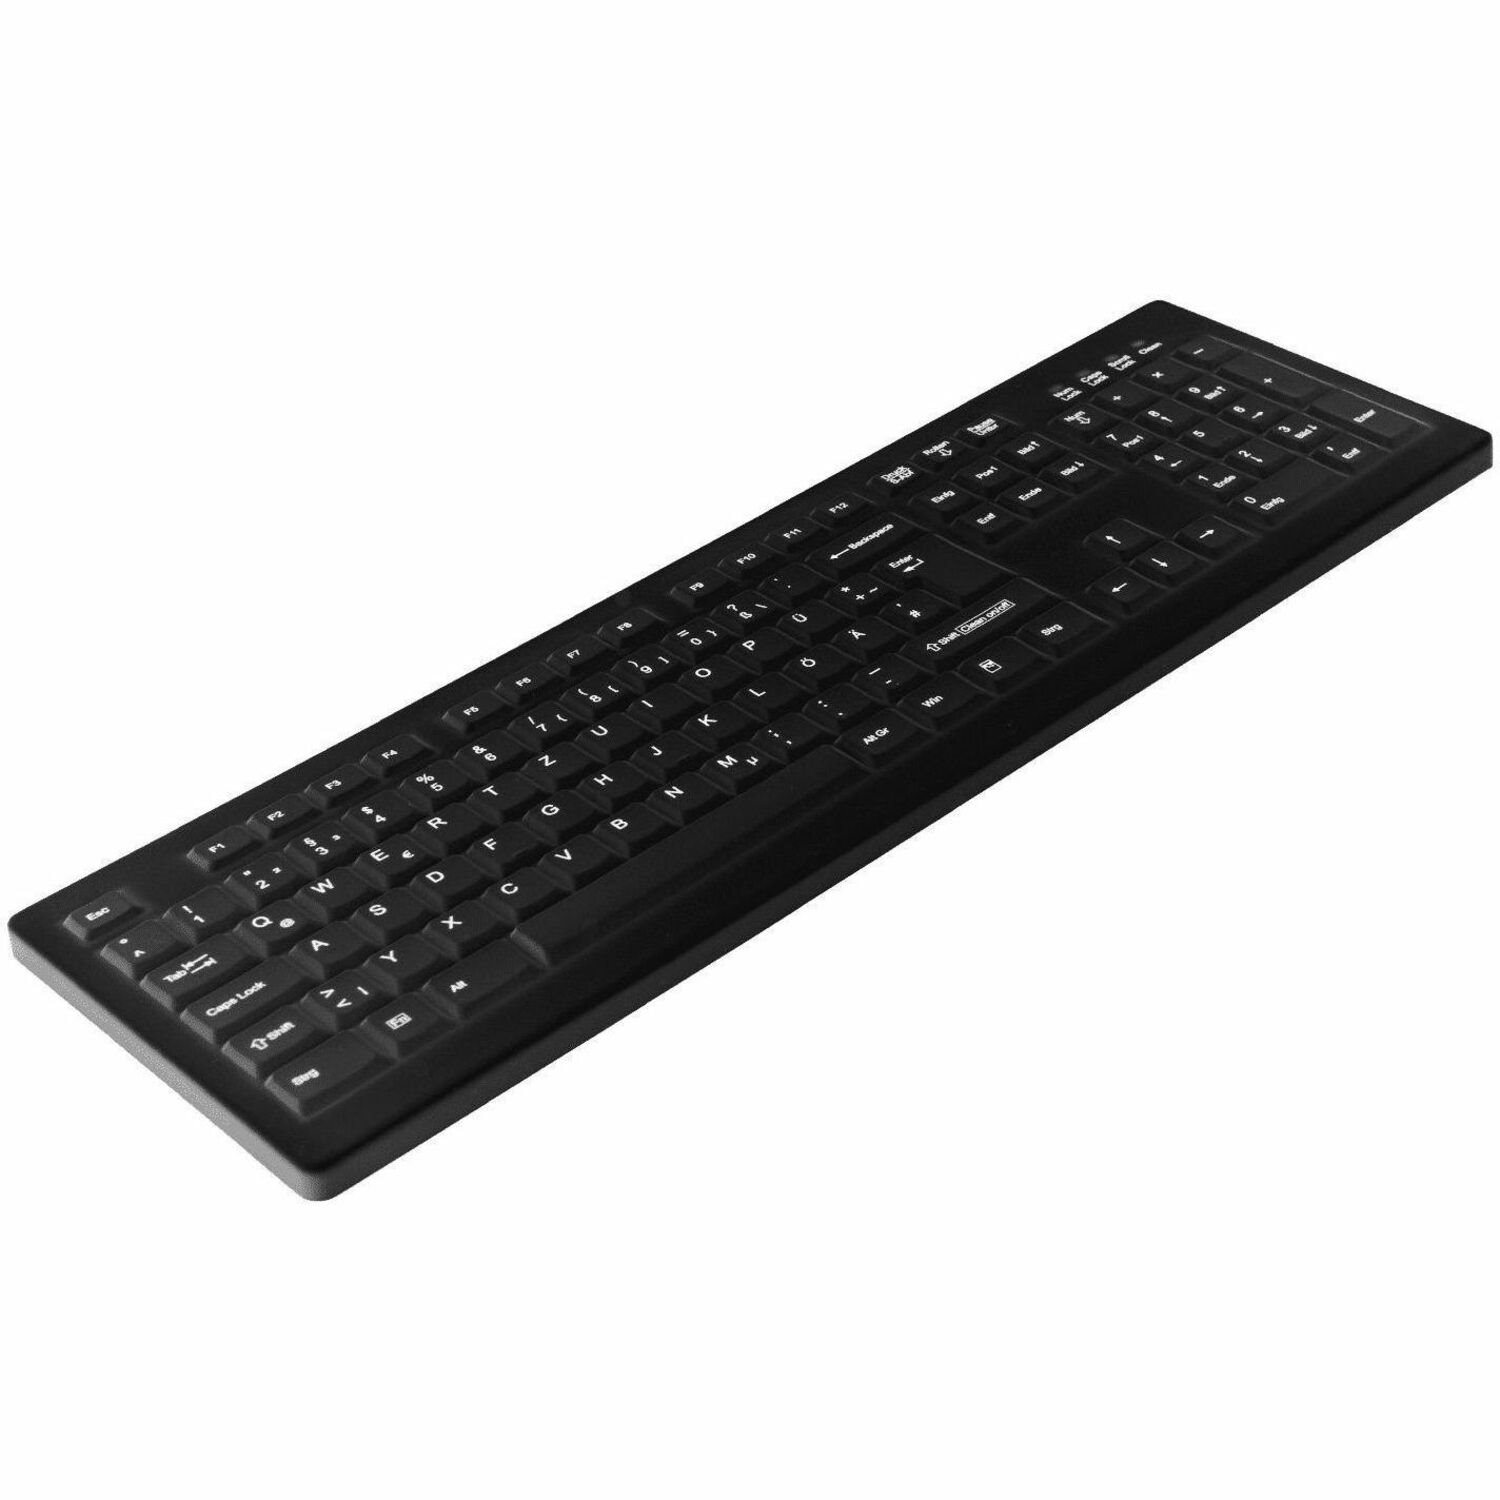 Active Key Keyboard - Wireless Connectivity - USB 1.1 Type A Interface - English (UK) - Black